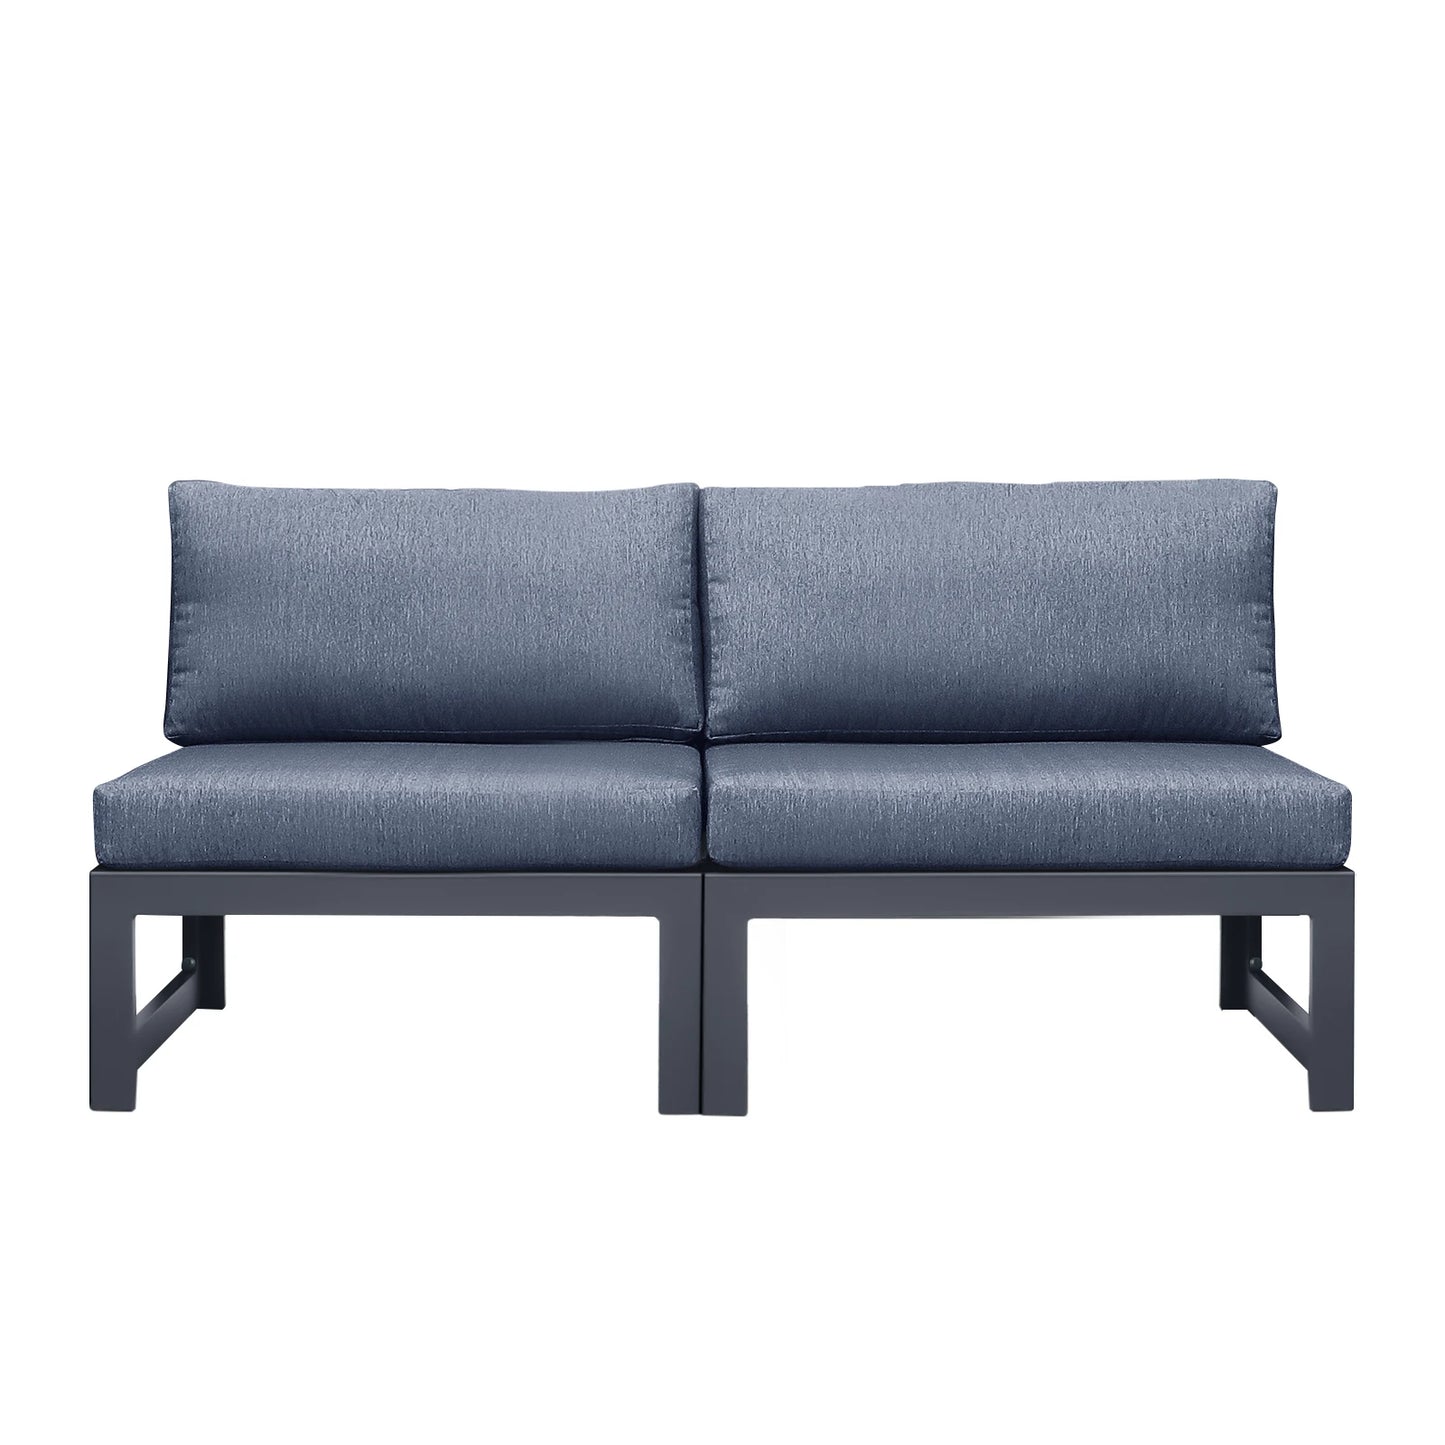 Patio Sectional armless love seat Sofa Set